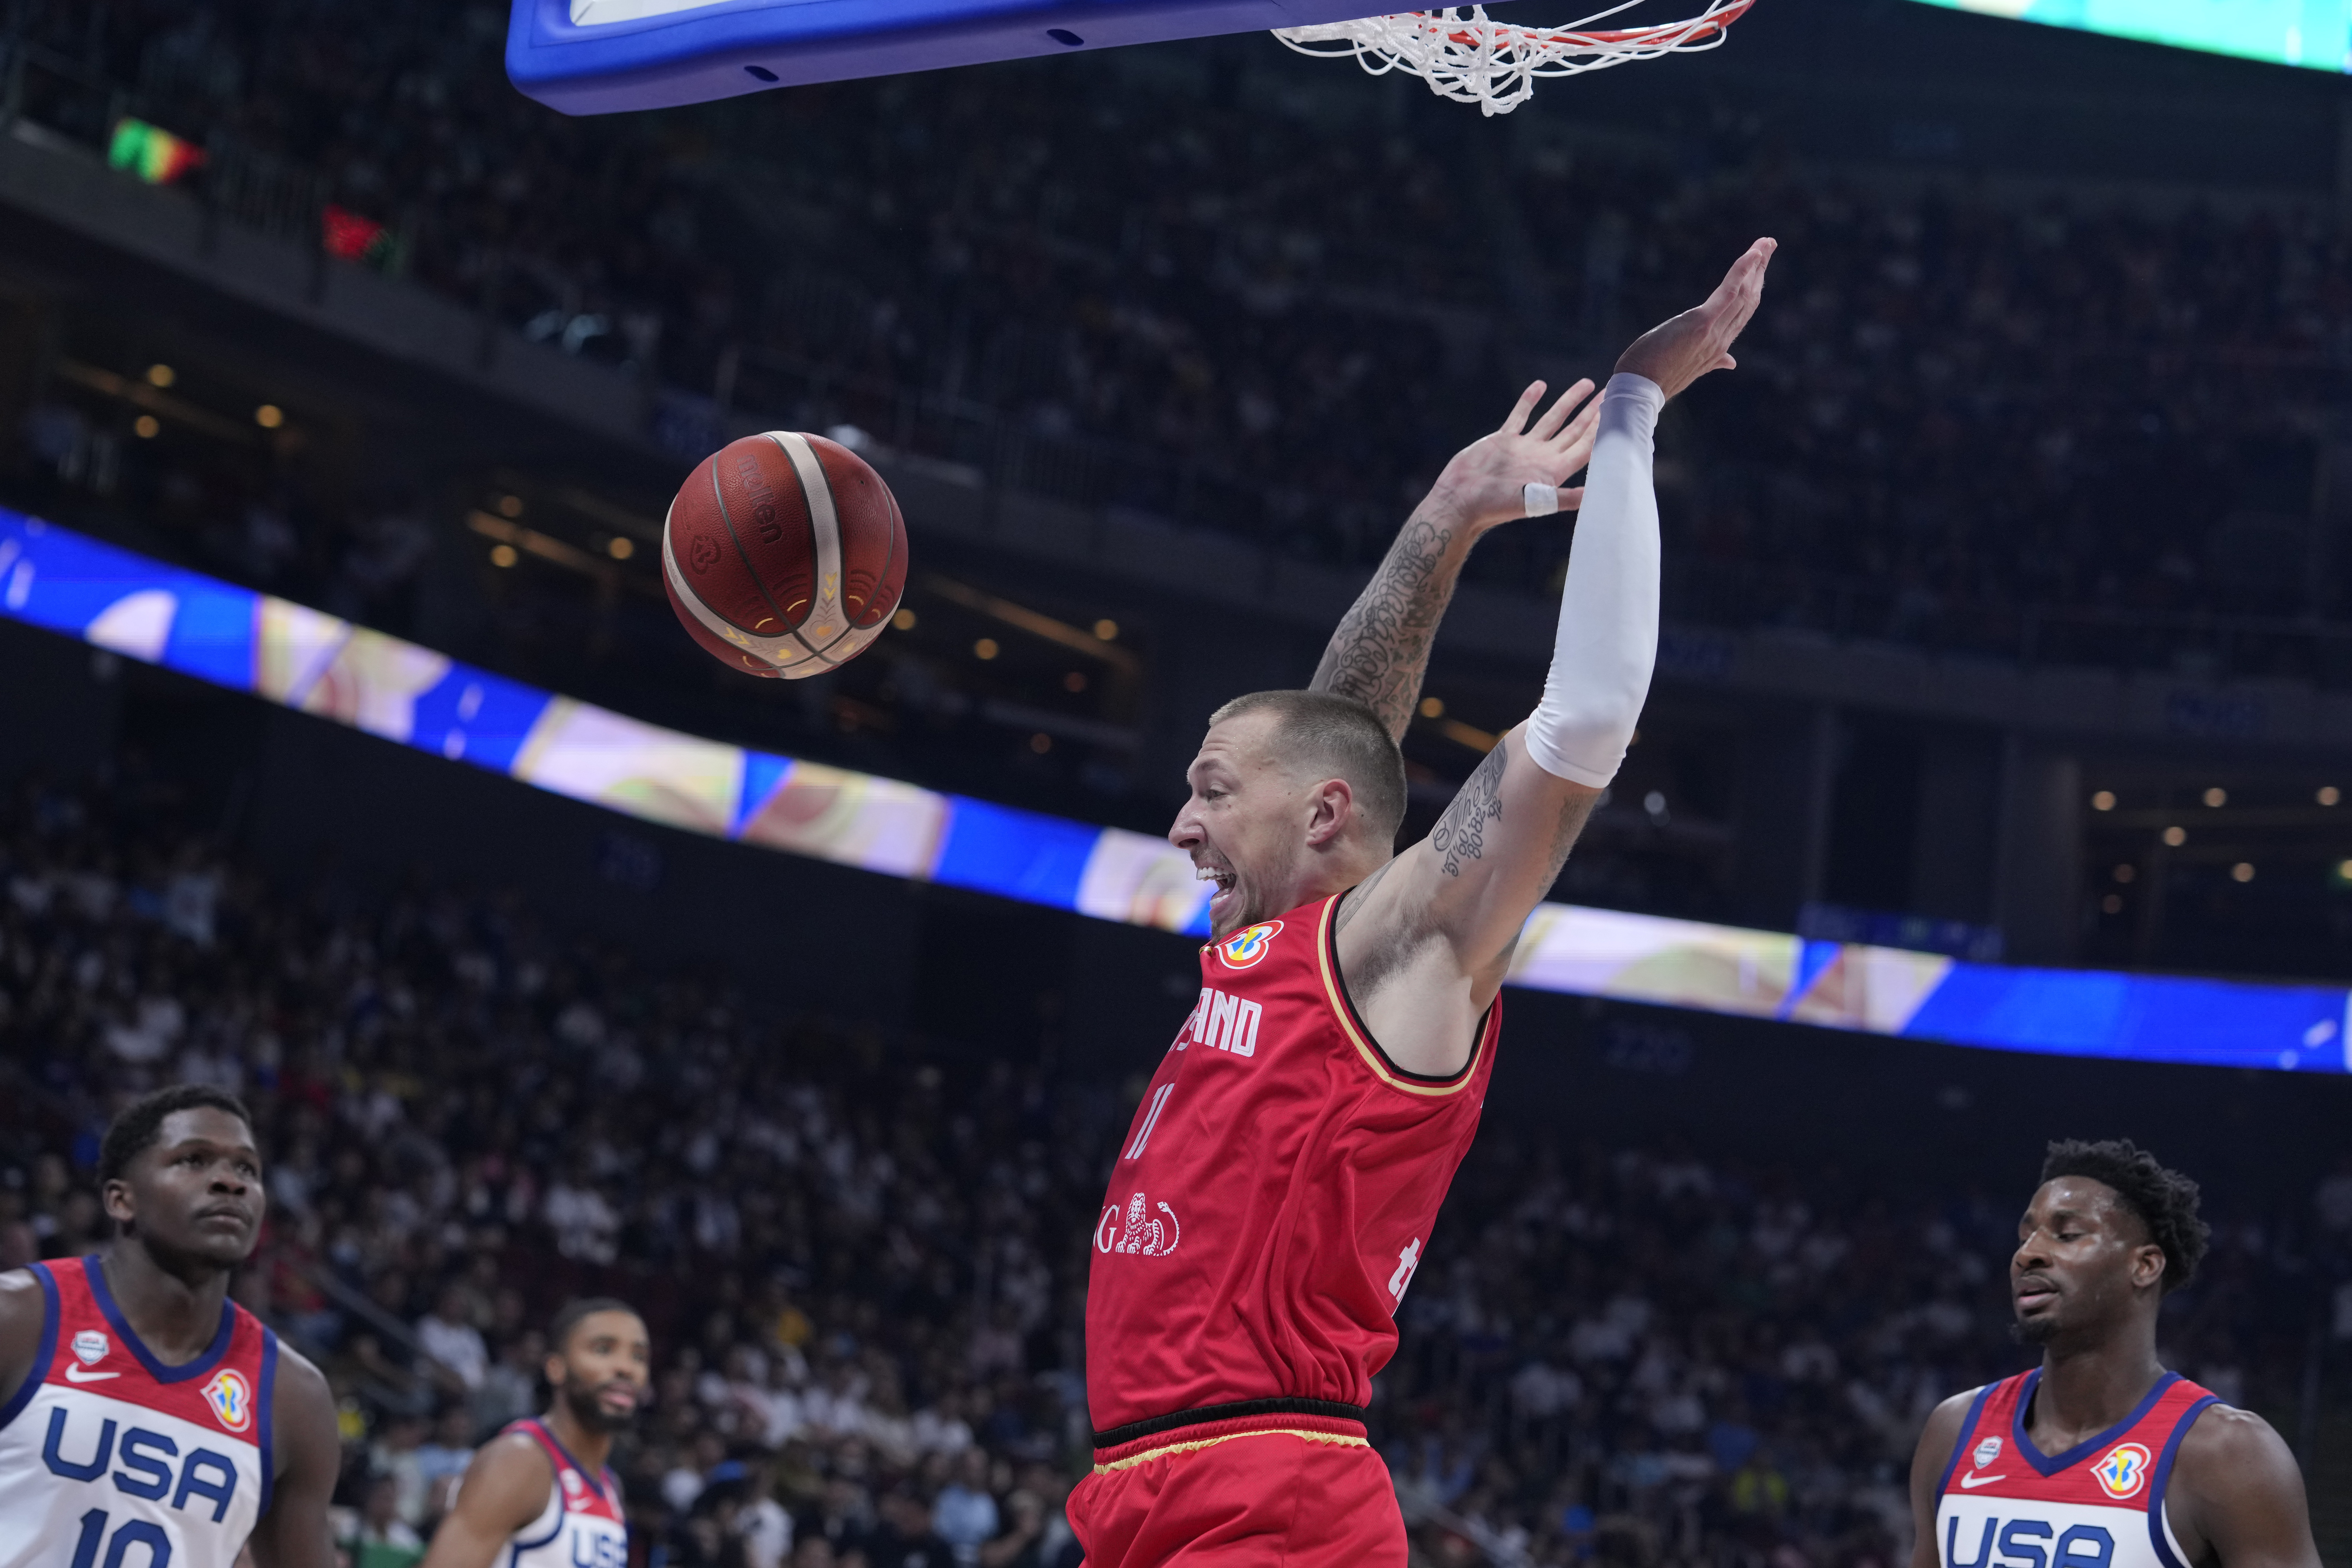 eurobasket live stream free